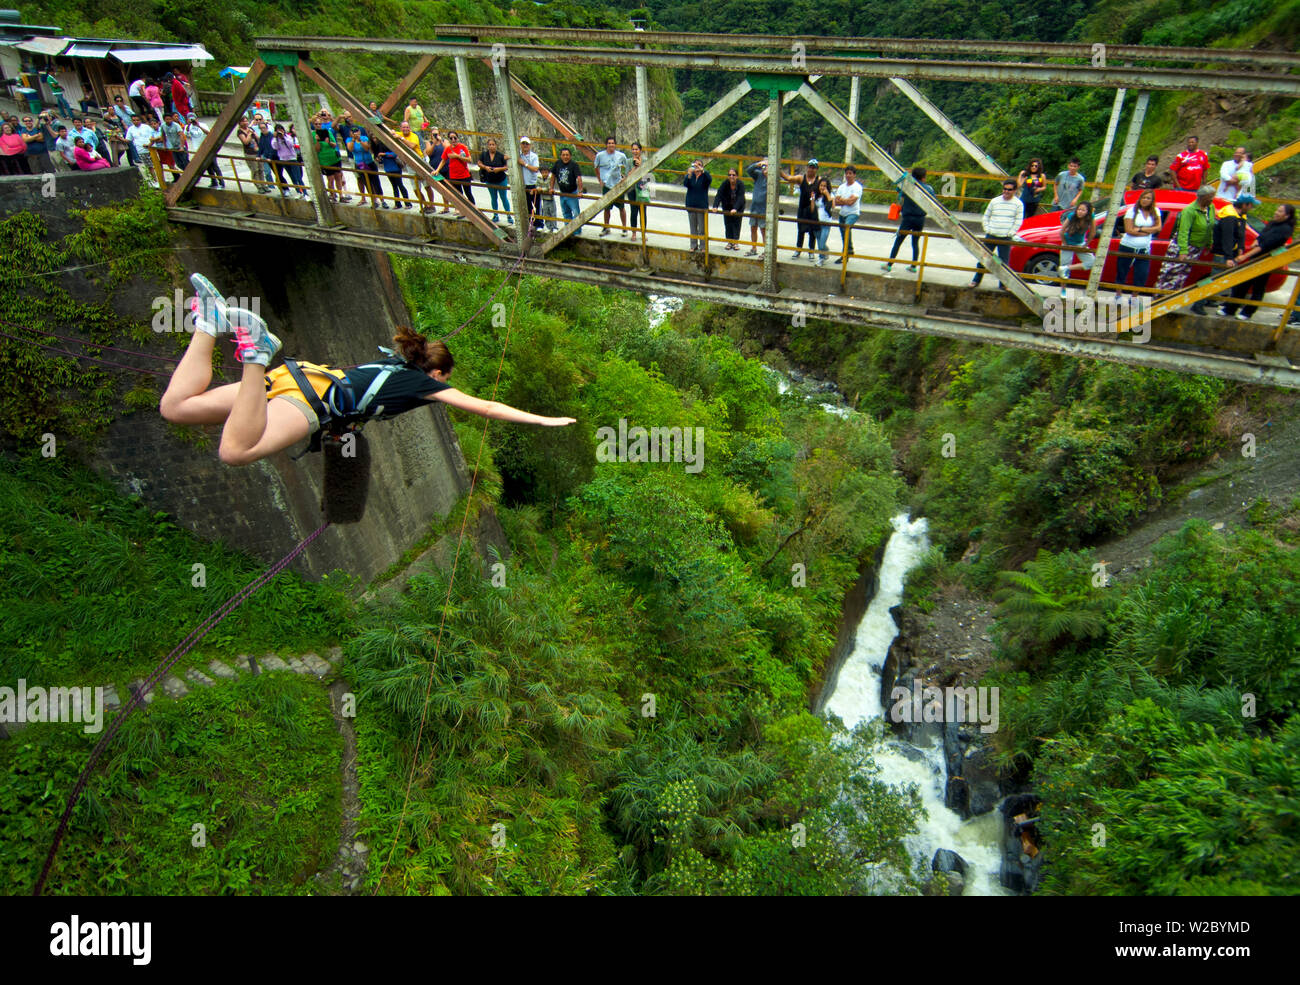 Bridge Jumping, Also Known As Puenting, Over The Rio Pastaza Valley, River Gorge, Route of The Waterfalls, Ruta de las Cascadas, Banos, Gateway To The Amazon, Tungurahua Province, Ecuador Stock Photo